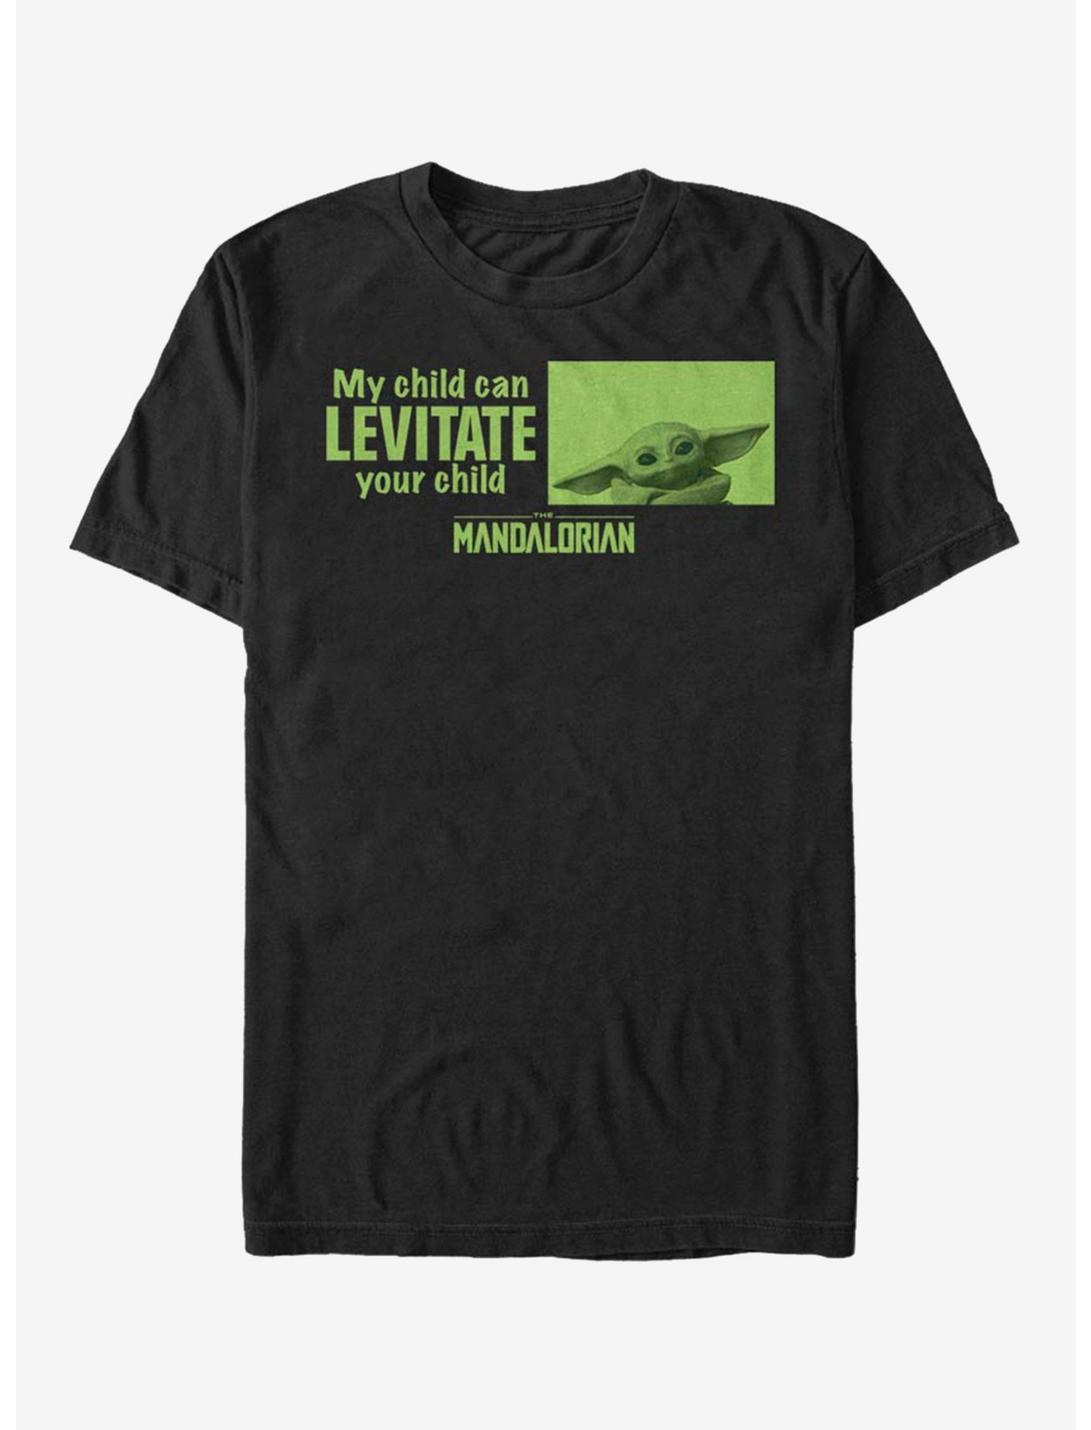 Star Wars The Mandalorian The Child Mine Can Levitate T-Shirt, BLACK, hi-res